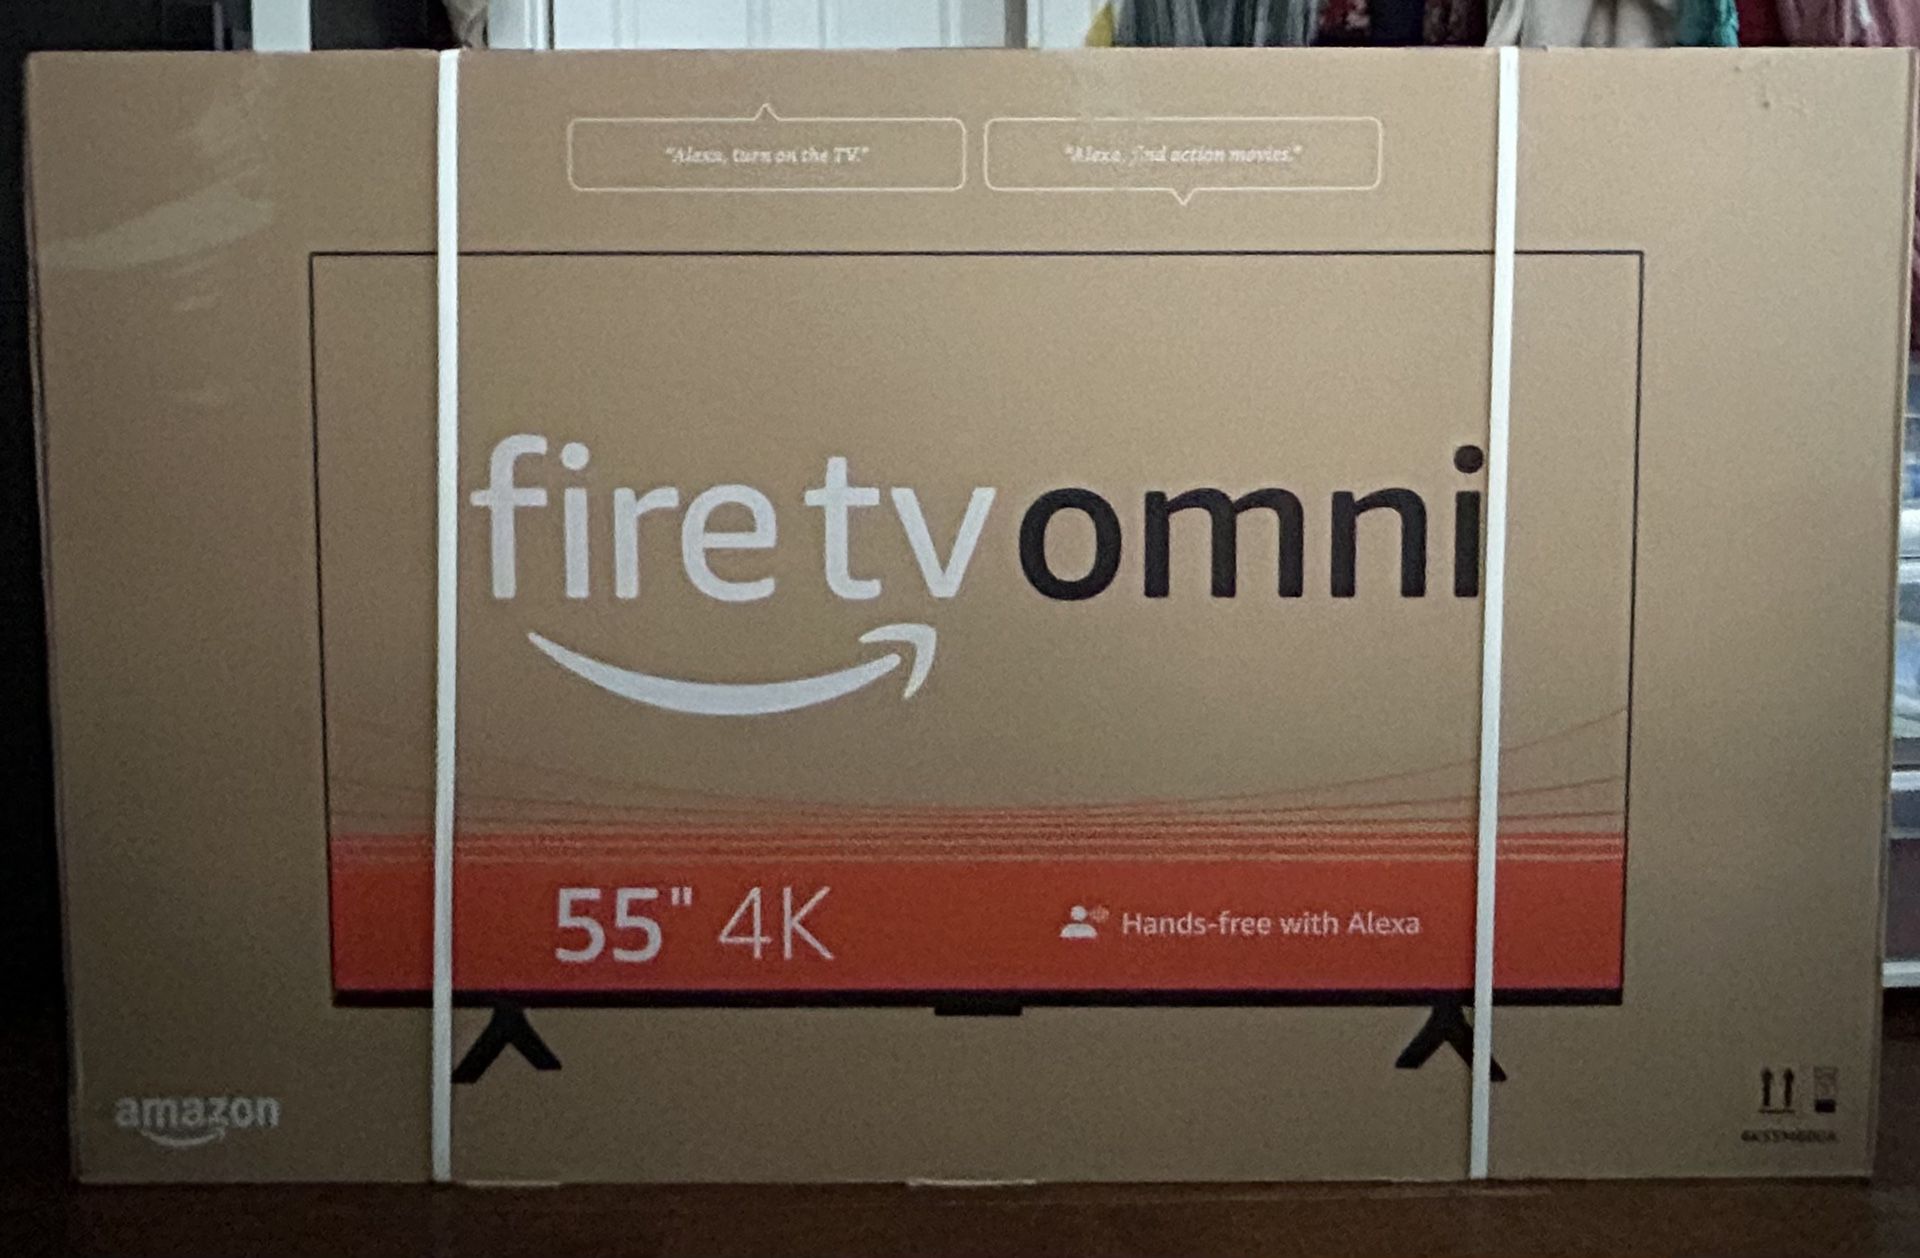 55 Inch 4k Amazon Fire TV Omni